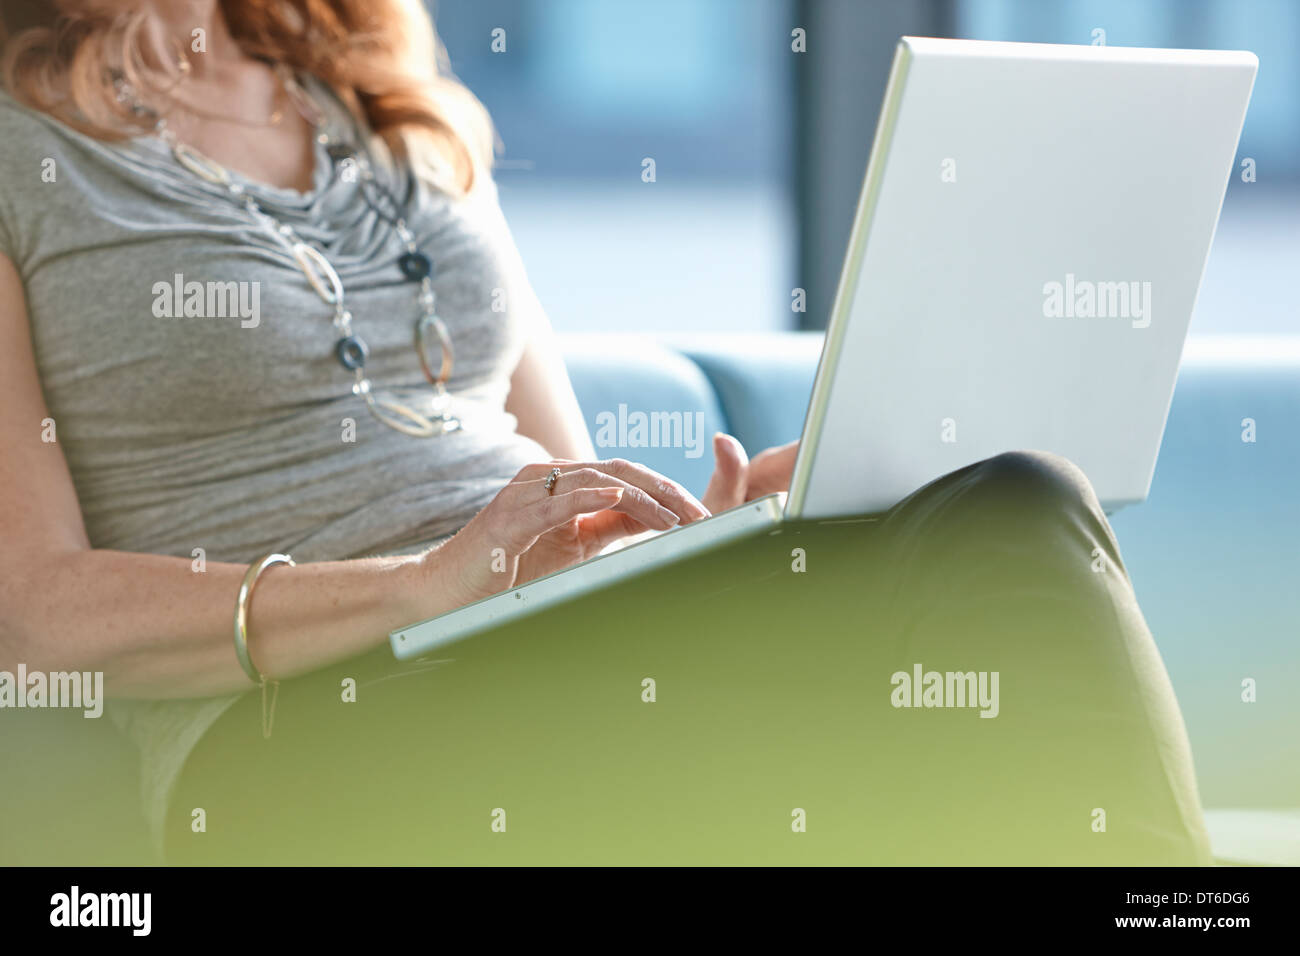 Geschäftsfrau mit laptop Stockfoto